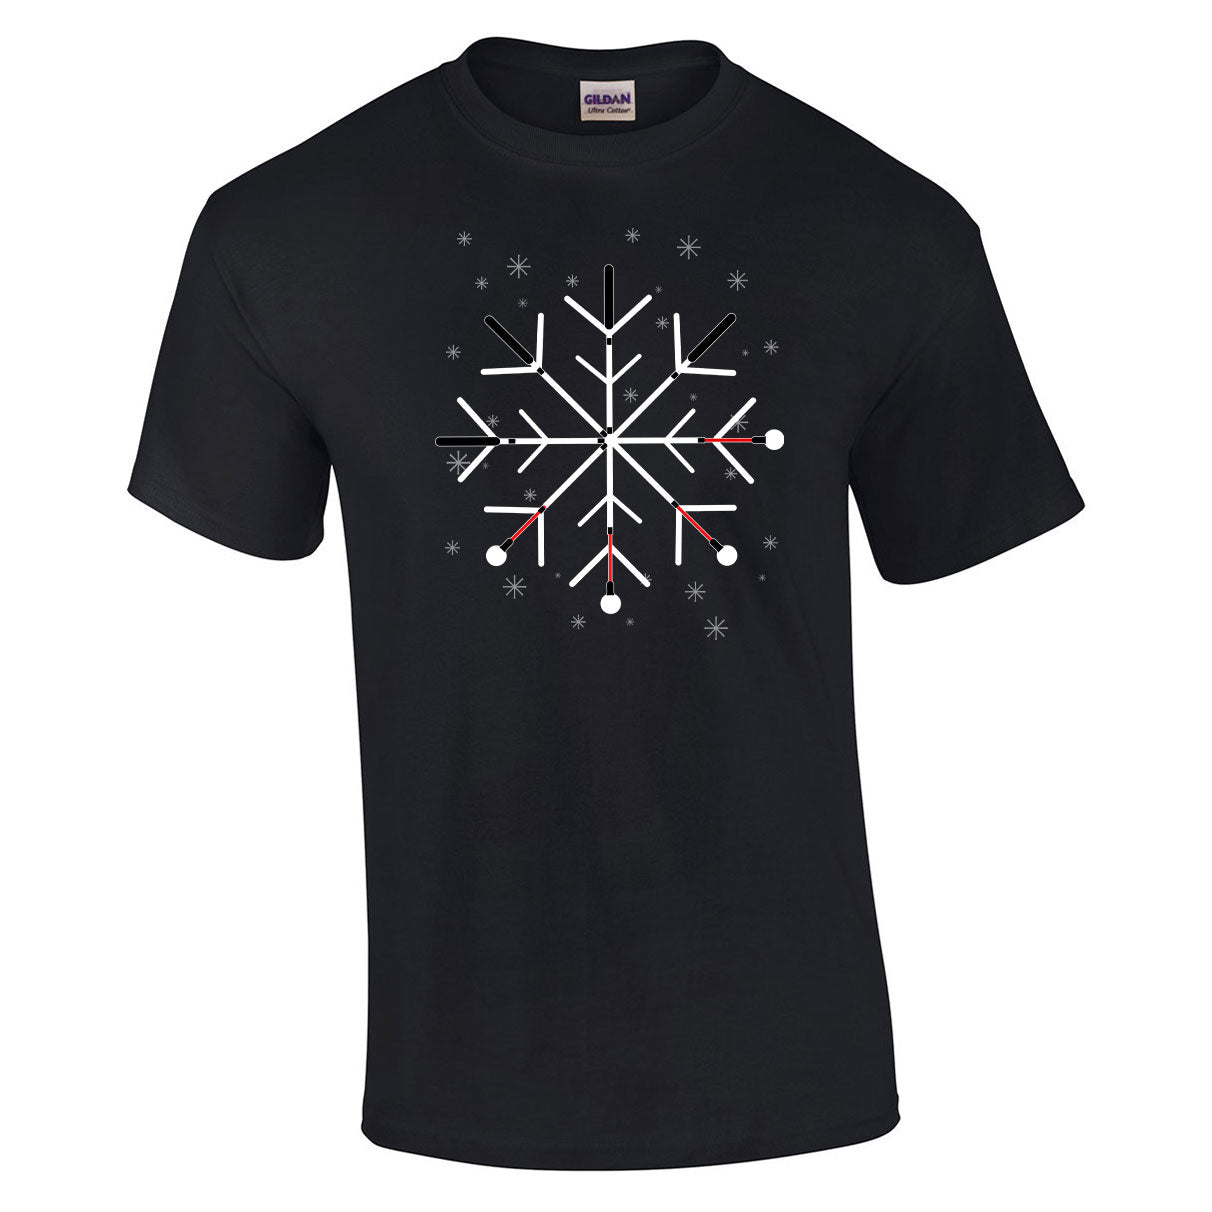 Original Snowflake White Cane T-Shirt - Black